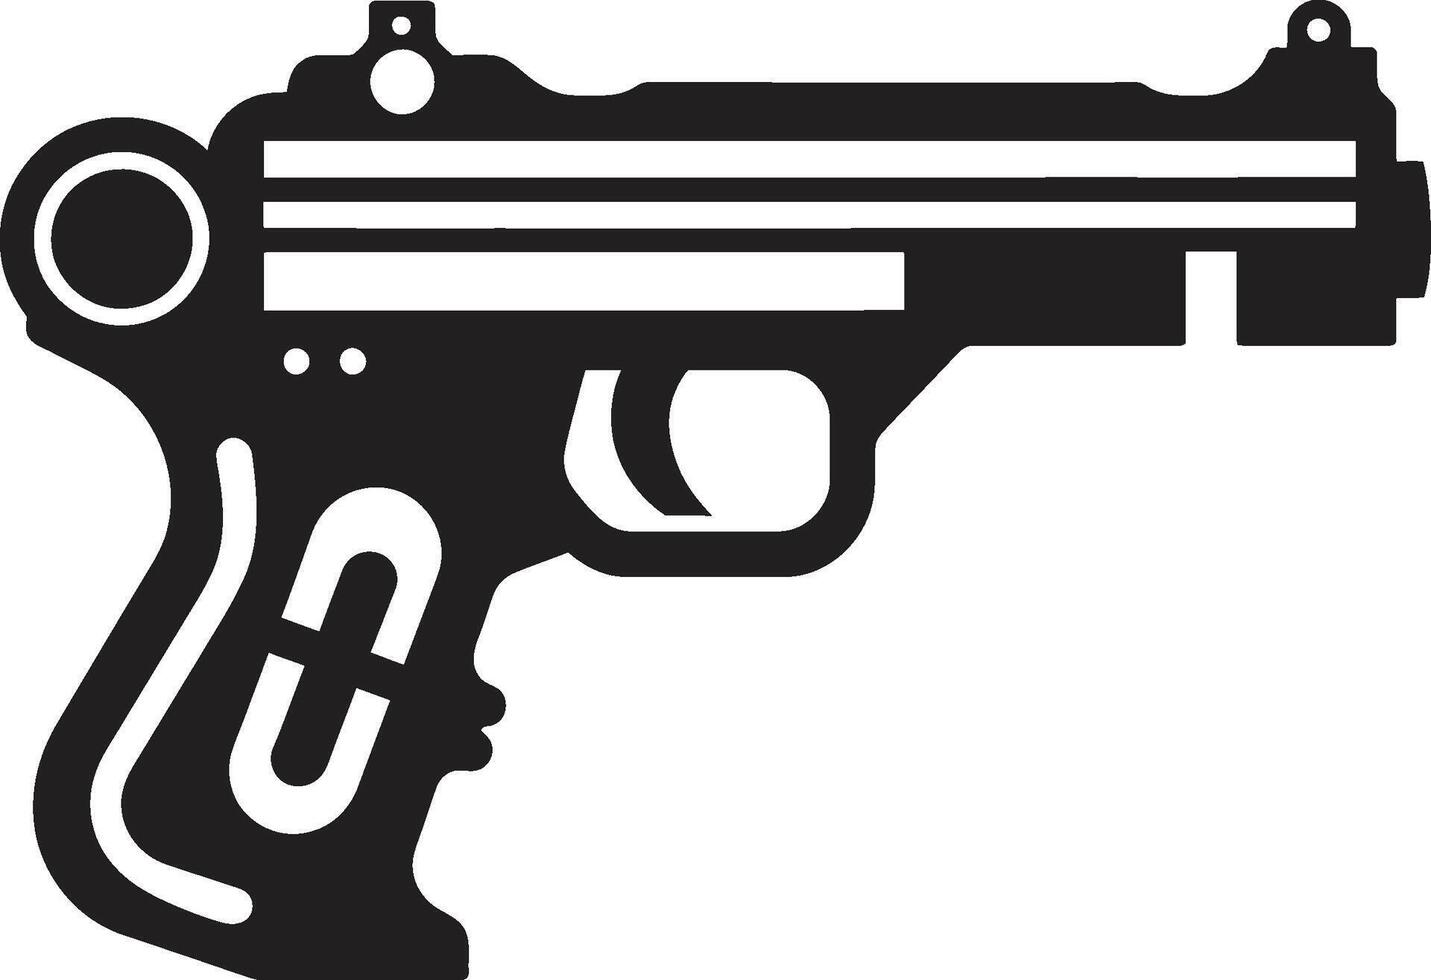 Plastic Patrolman Iconic Black Logo featuring Toy Gun Weapon Playtime Peace Guardian Vector Symbol of a Toy Gun in Black